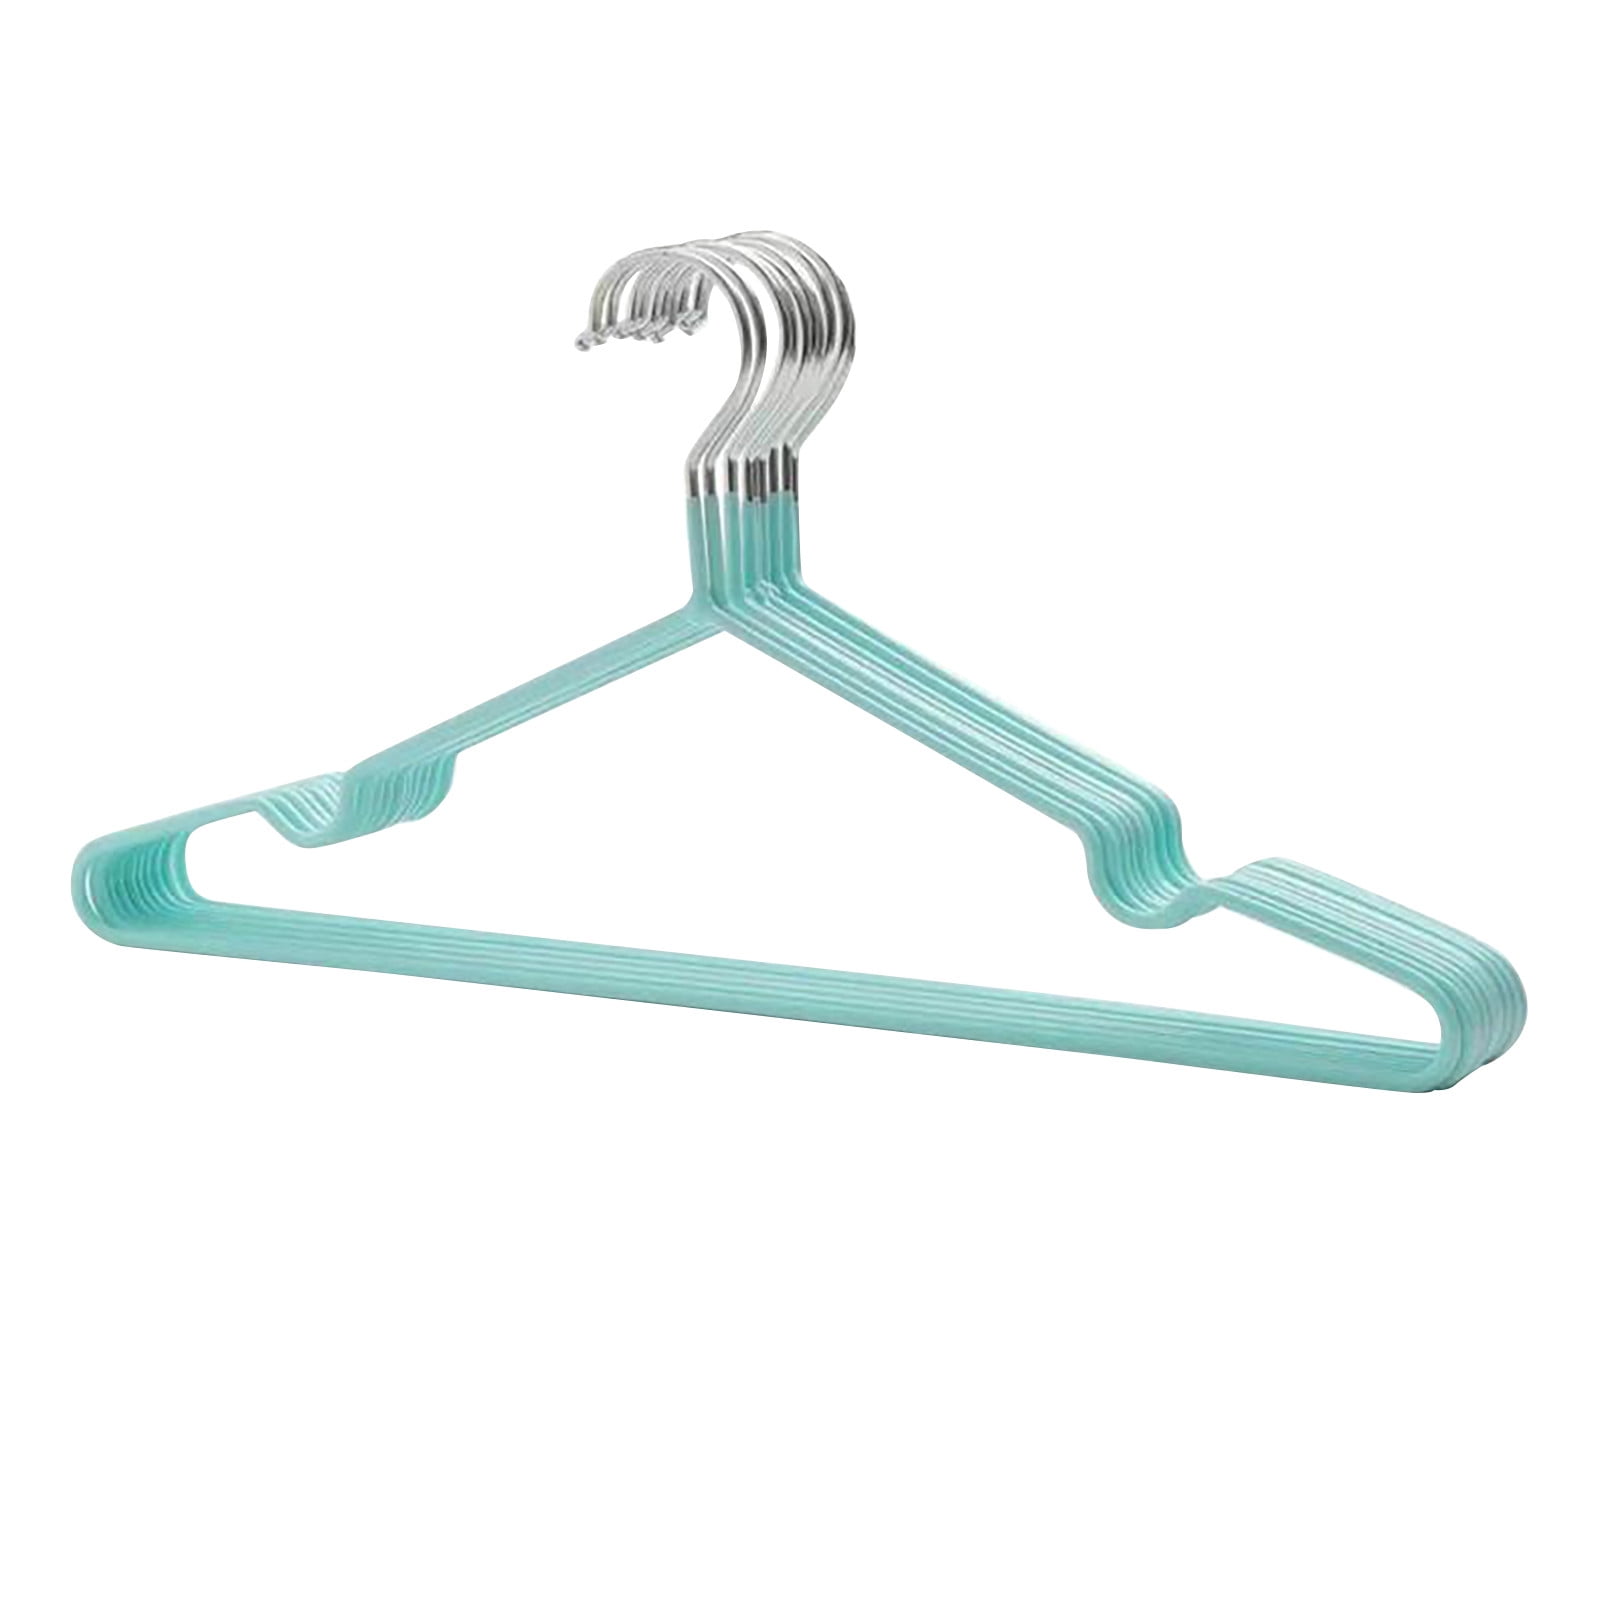 MINT Velvet/Silver Hook Clothes Hanger Suit Hangers Non Slip Coat Hangers 